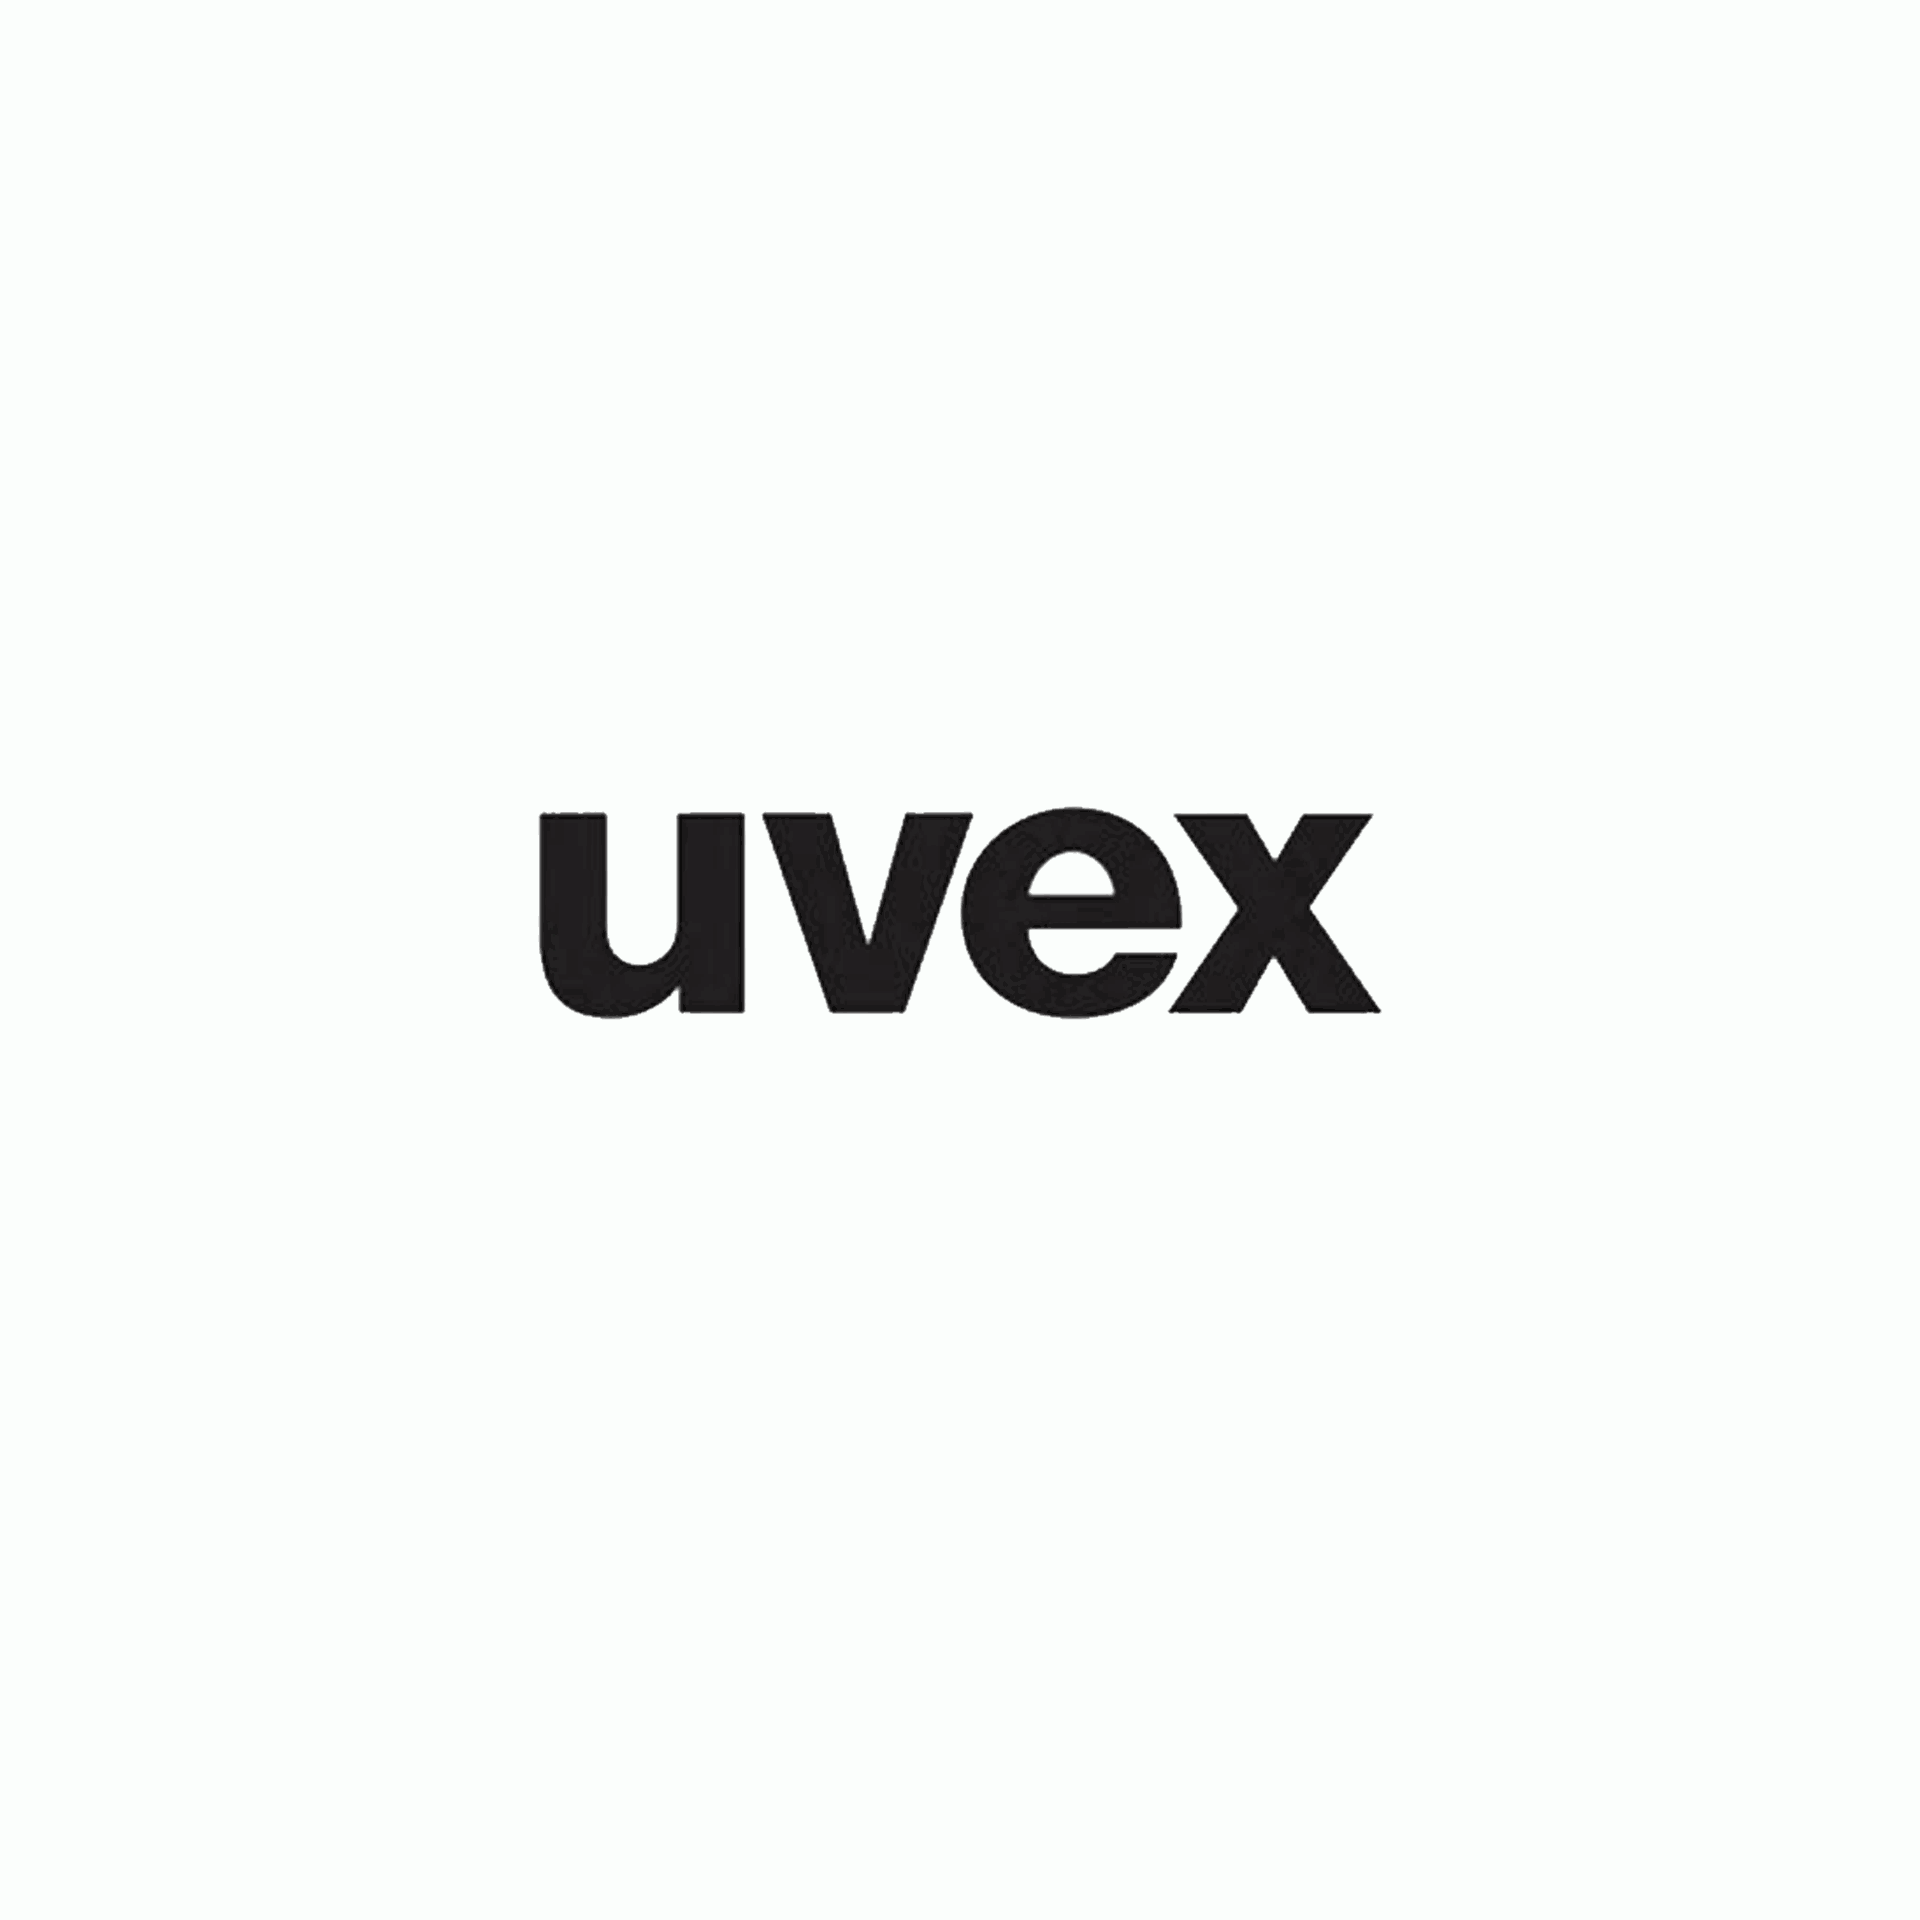 Brand: uvex